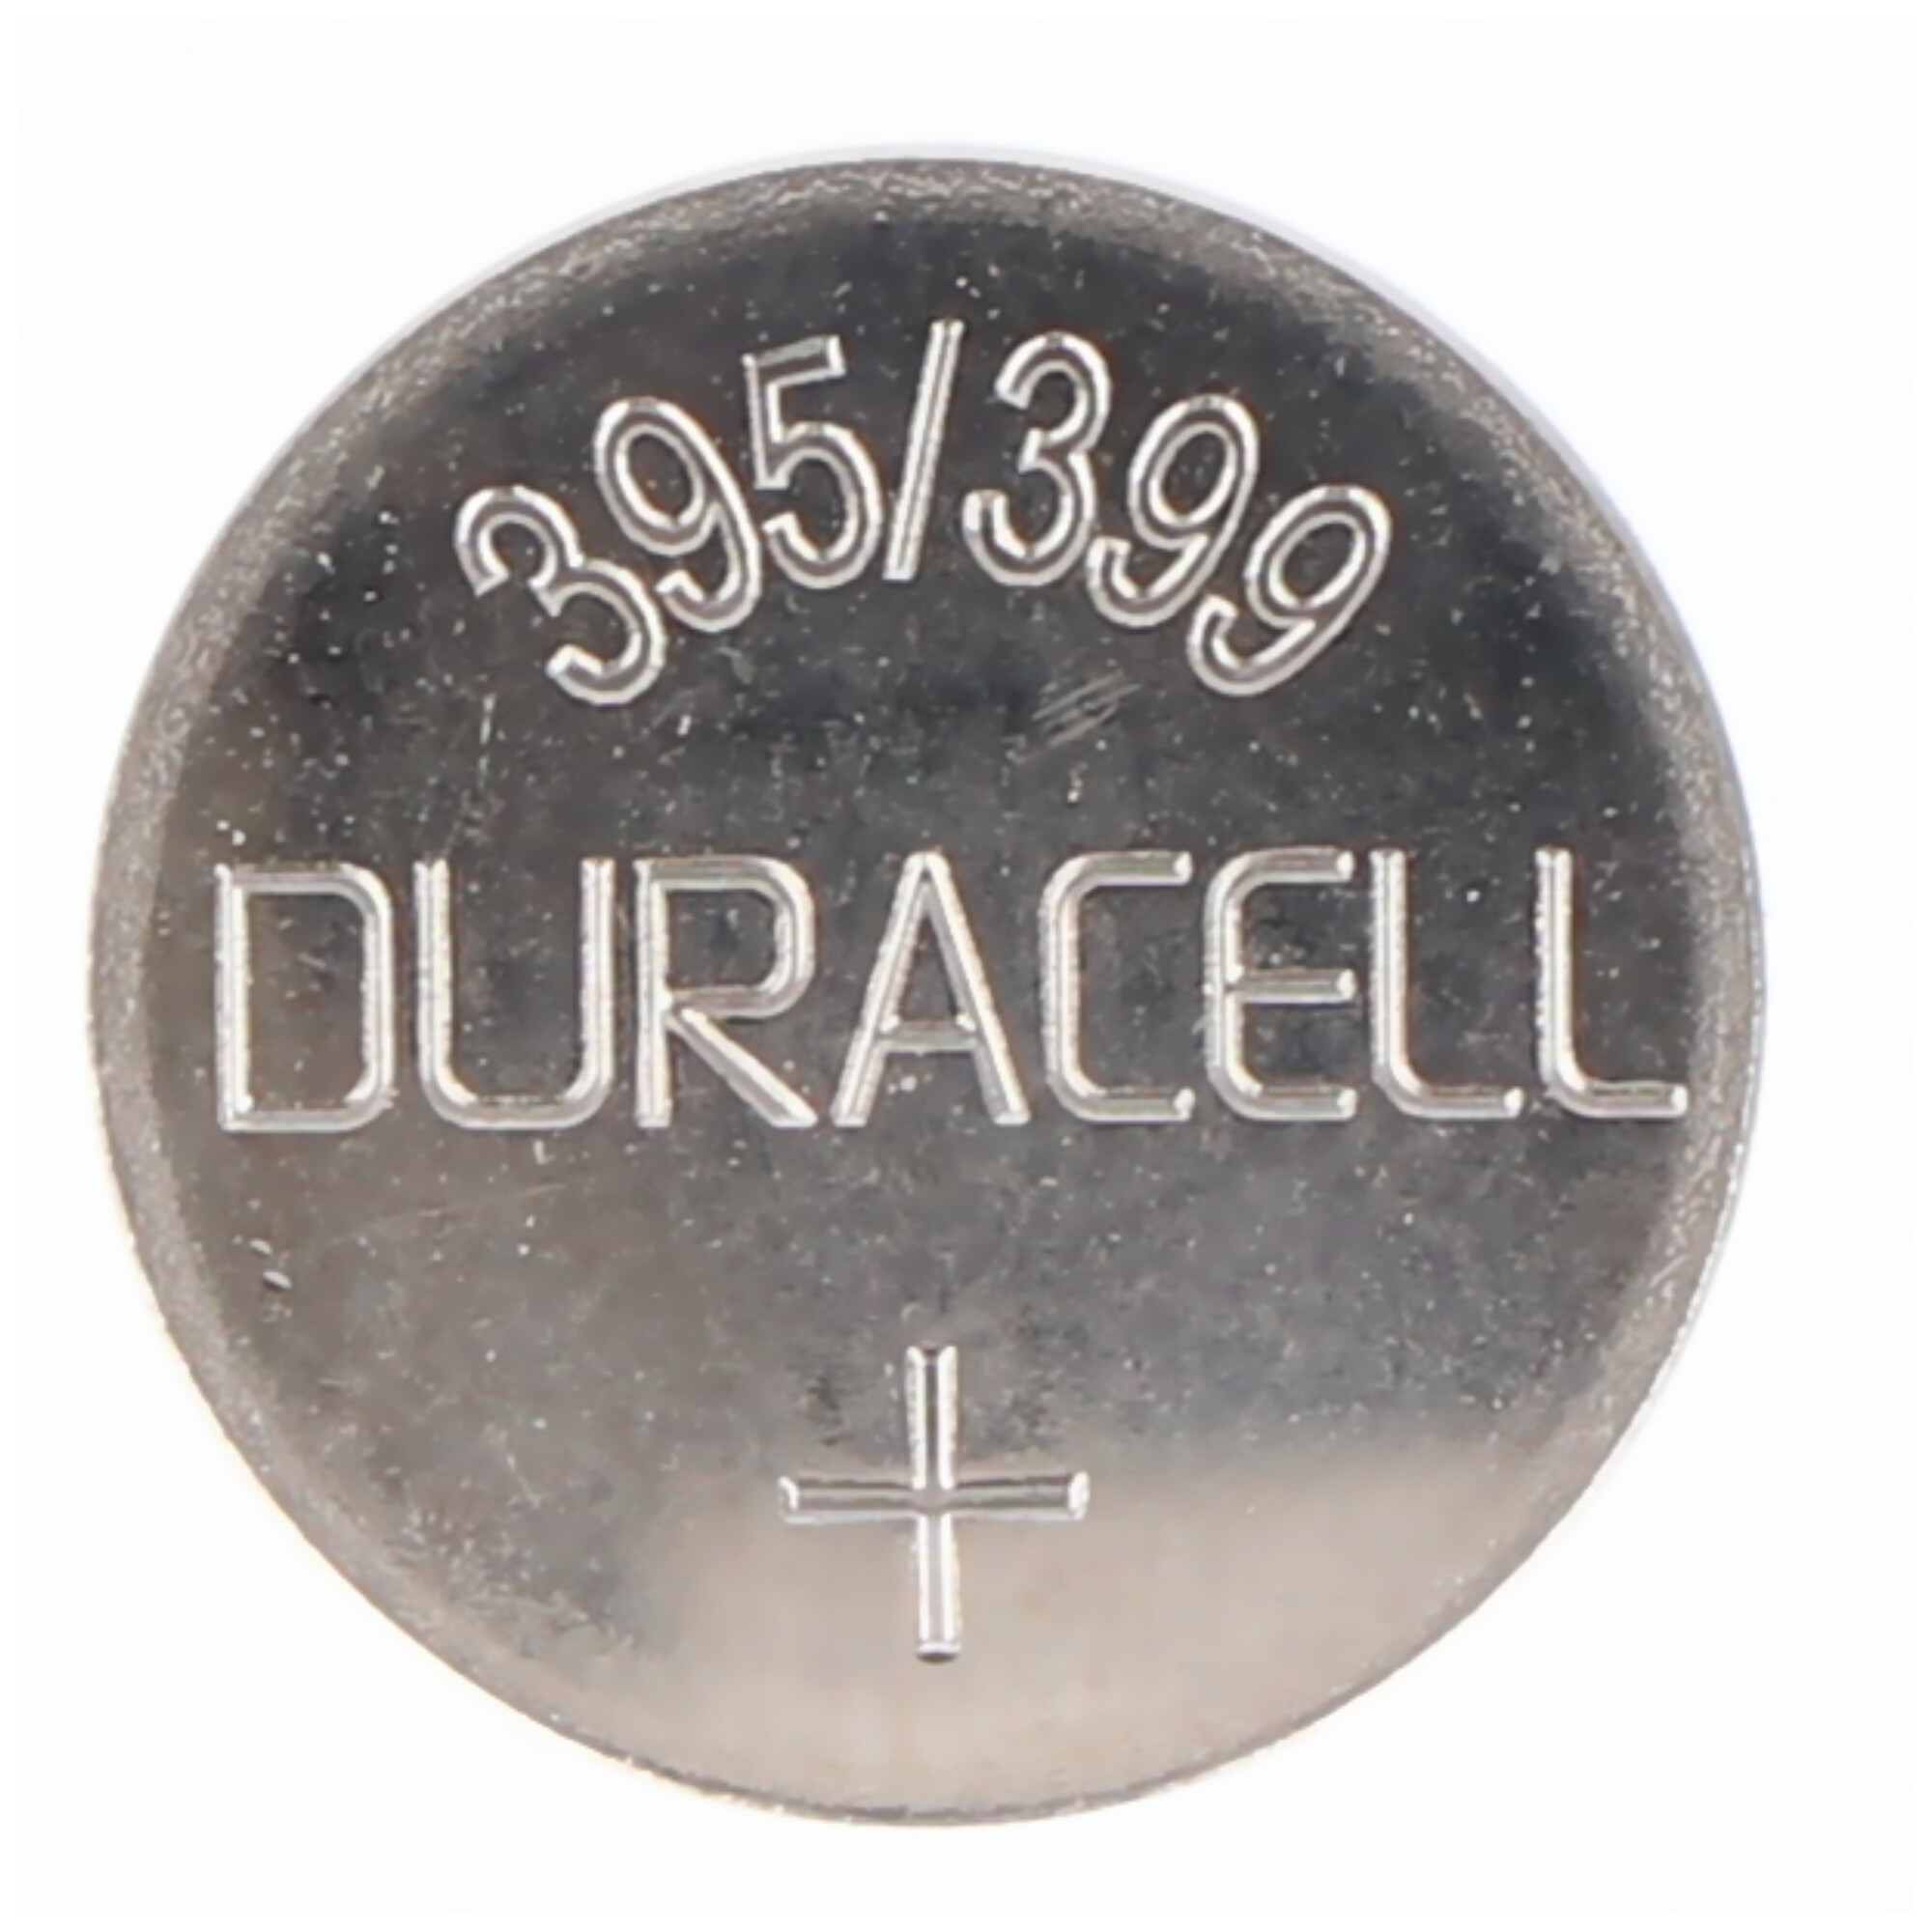 Duracell Batterie Silver Oxide, Knopfzelle, 395/399, SR57, 1.5V Watch, Retail Blister (1-Pack)